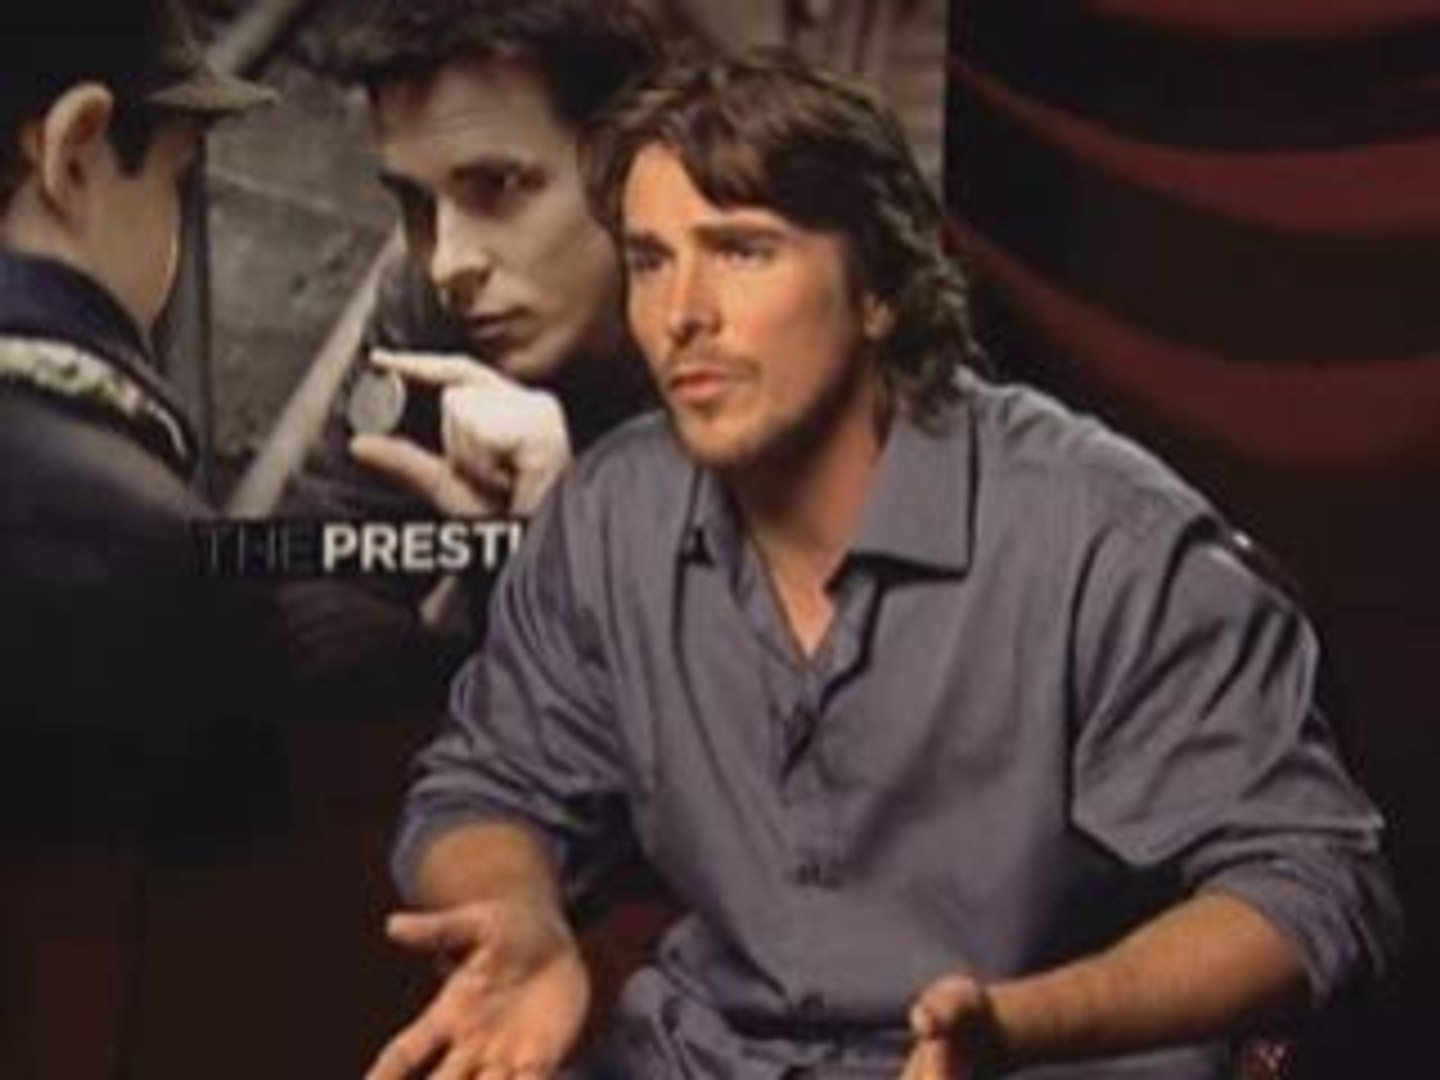 The Prestige / Interview #6 (Christian Bale)